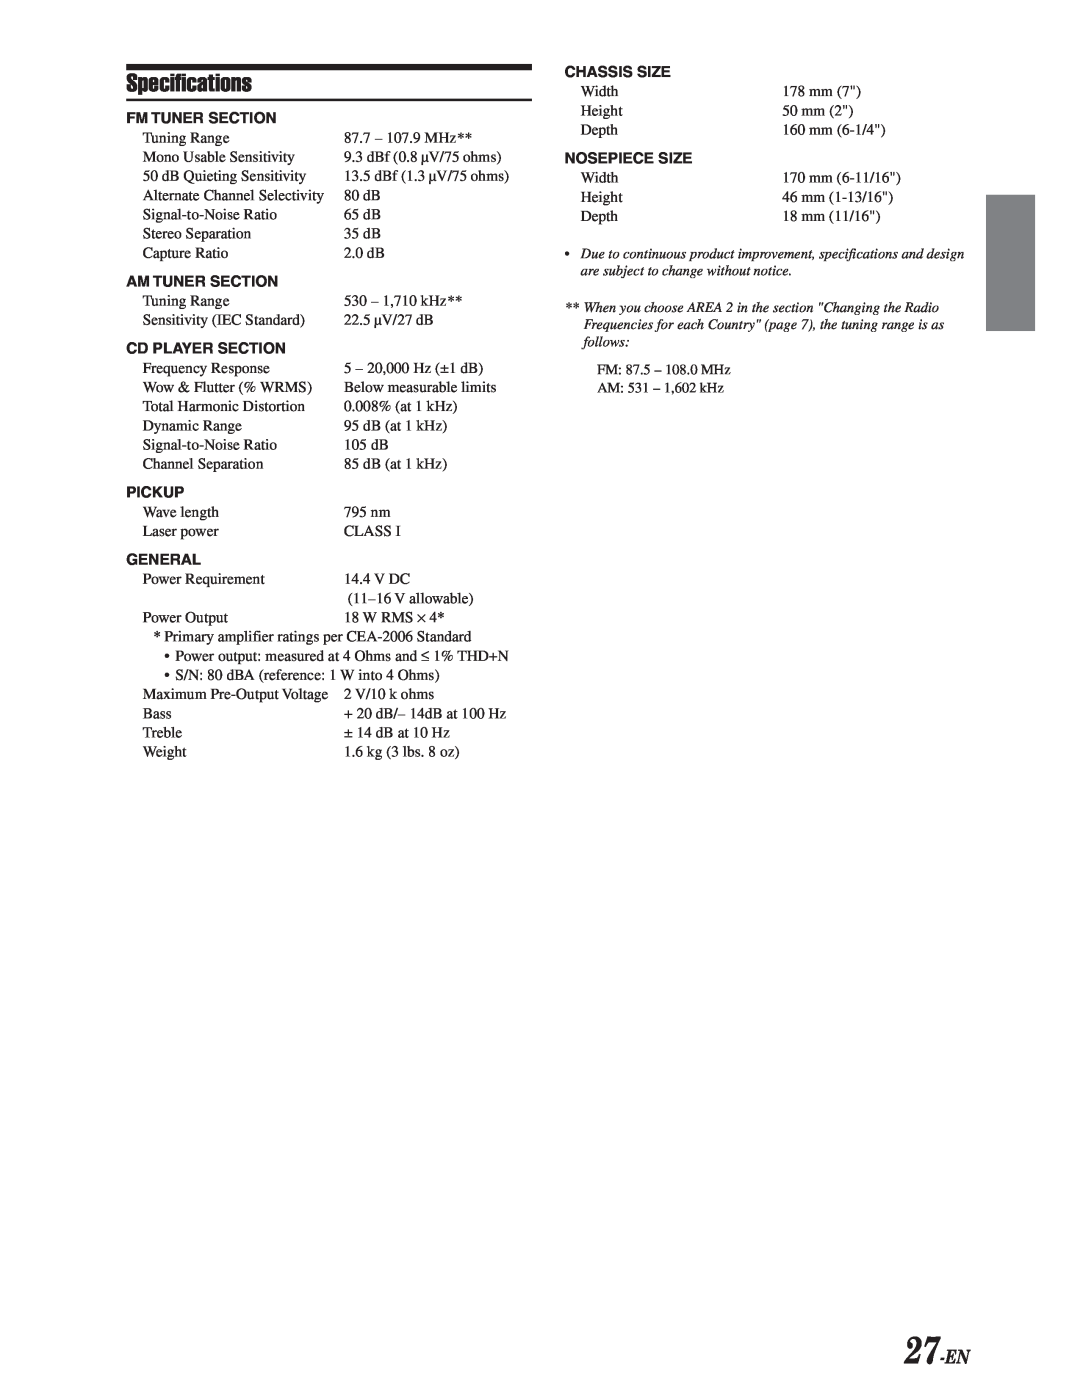 Alpine CDA-9847 owner manual Specifications, 27-EN 